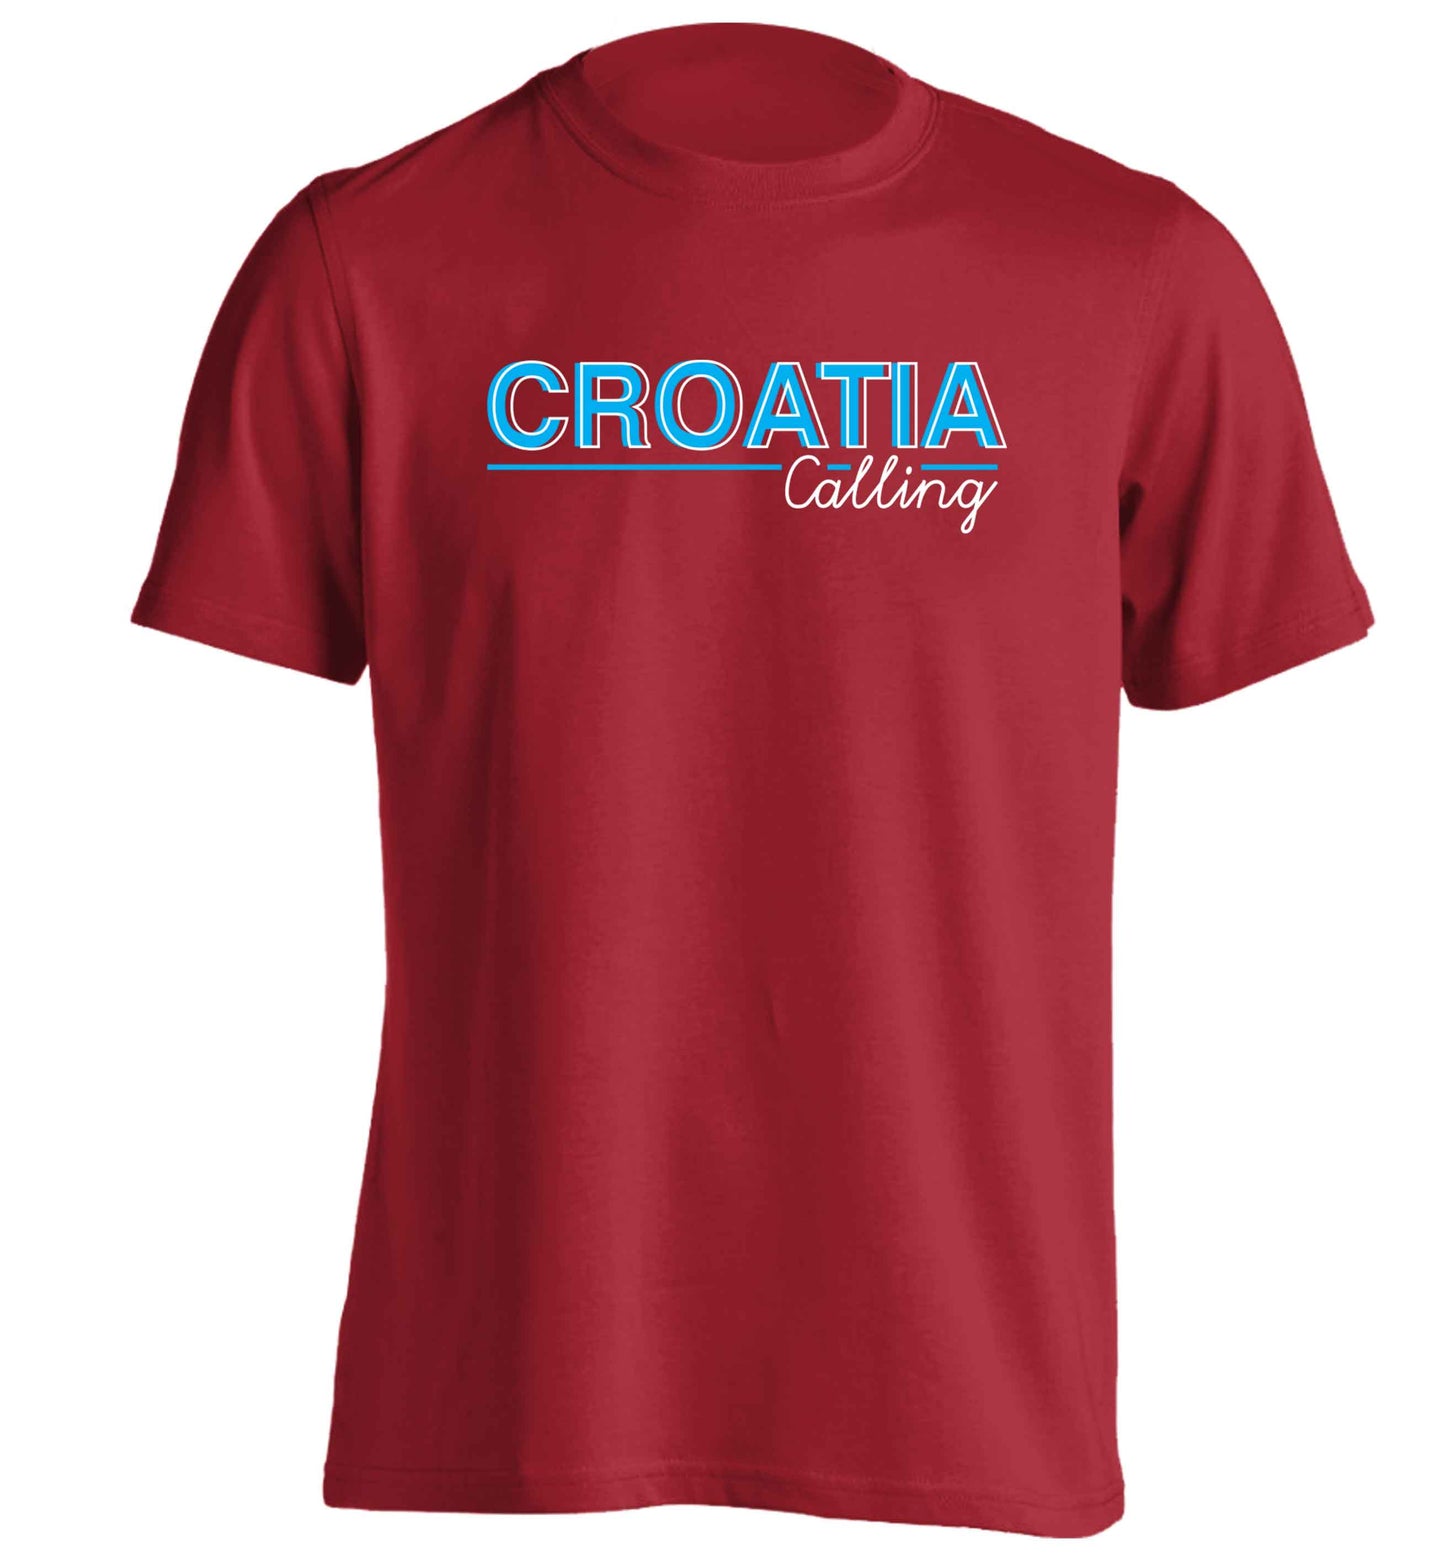 Croatia calling adults unisex red Tshirt 2XL